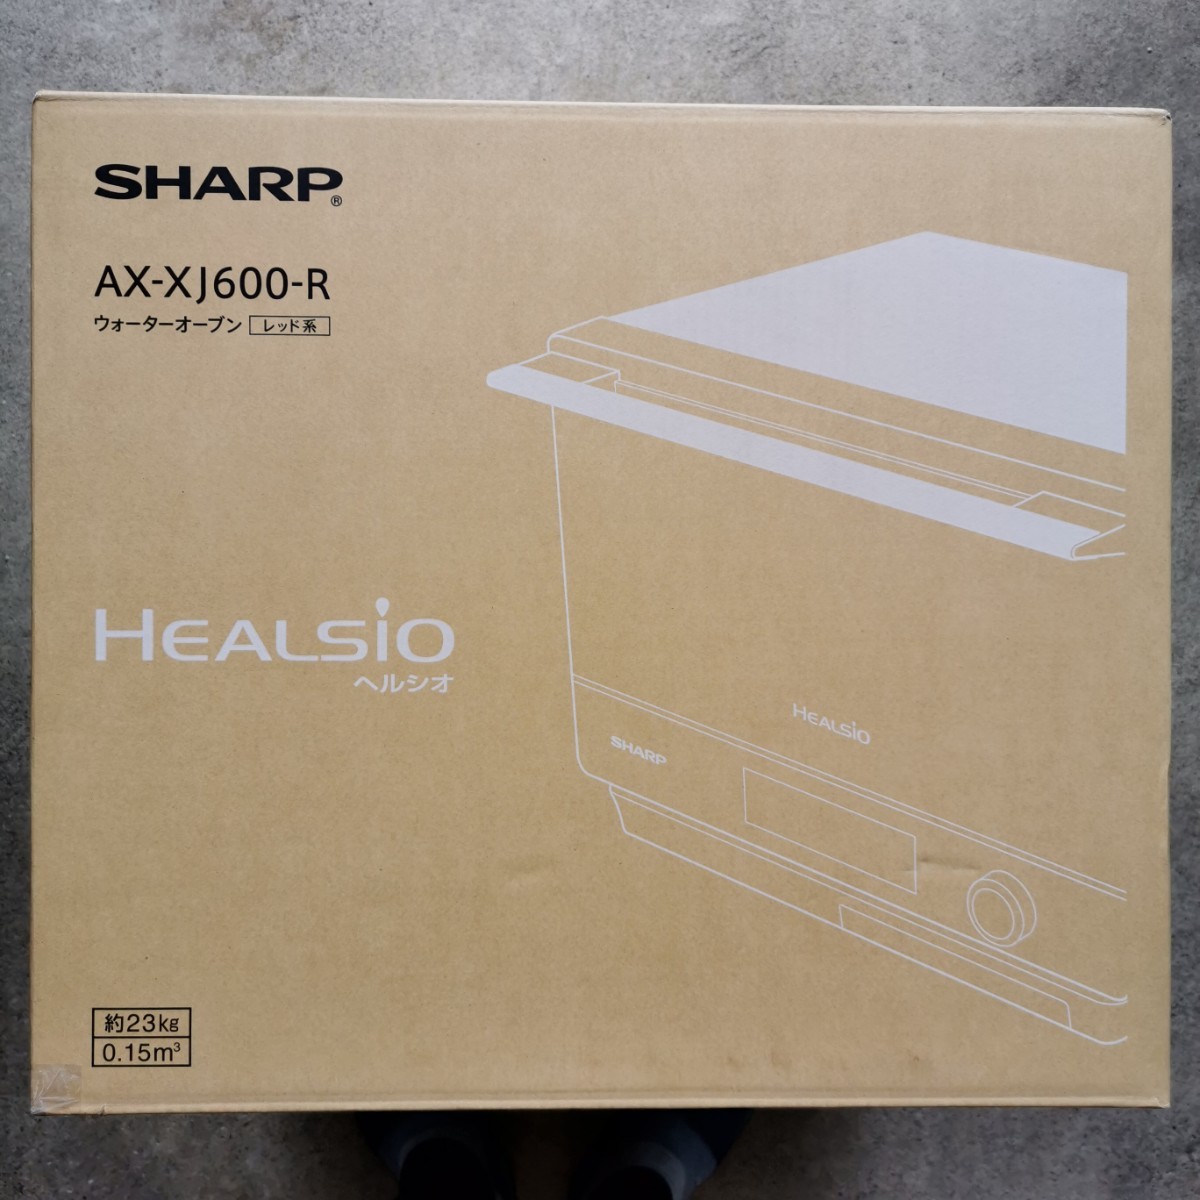 SHARP AX-XJ600-R 【未使用新品・購入証明書有・即日発送】